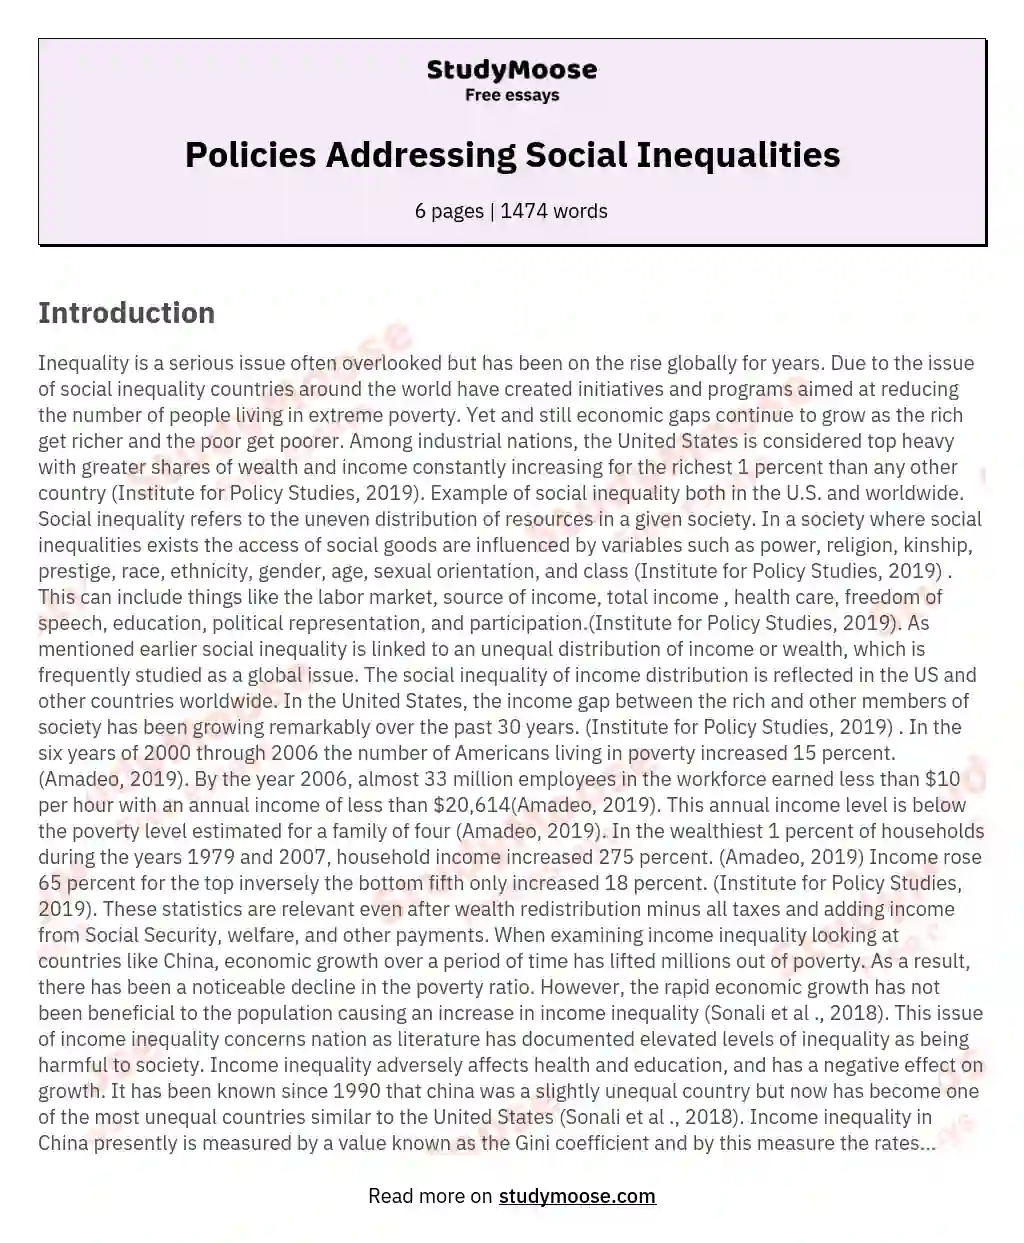 Policies Addressing Social Inequalities essay